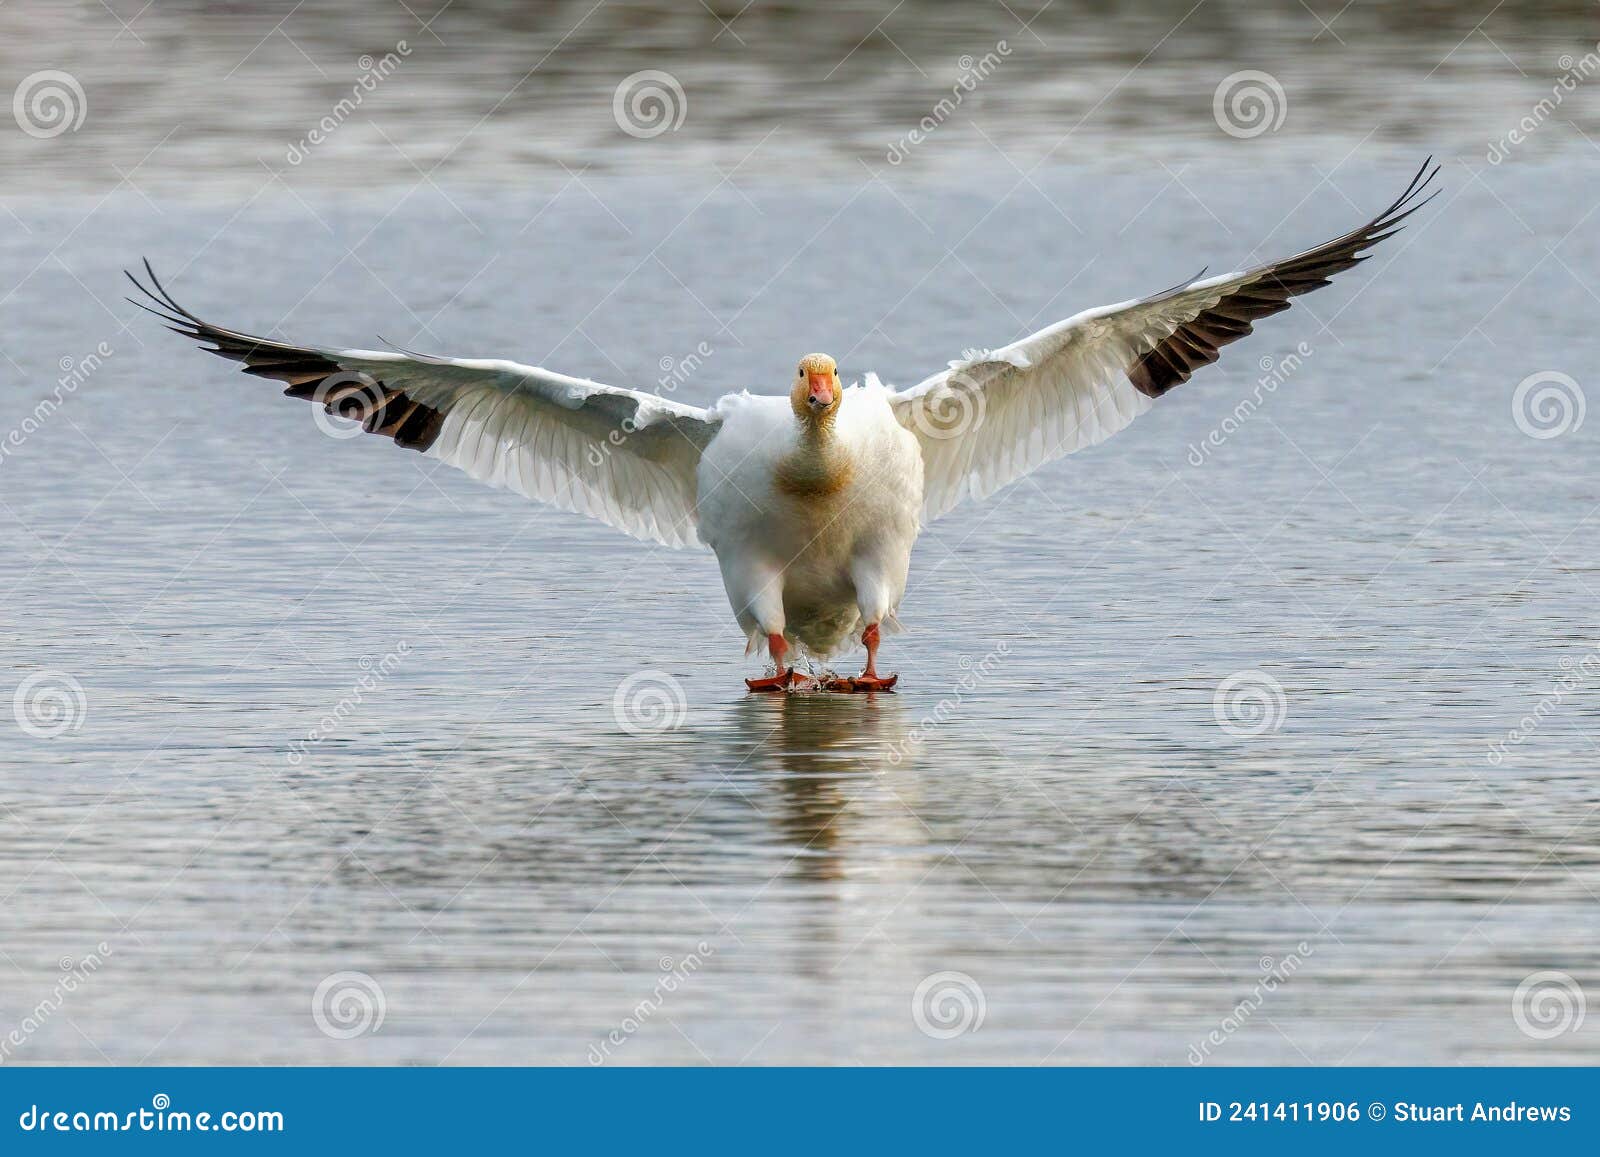 snow goose - anser caerulescens landing on water.